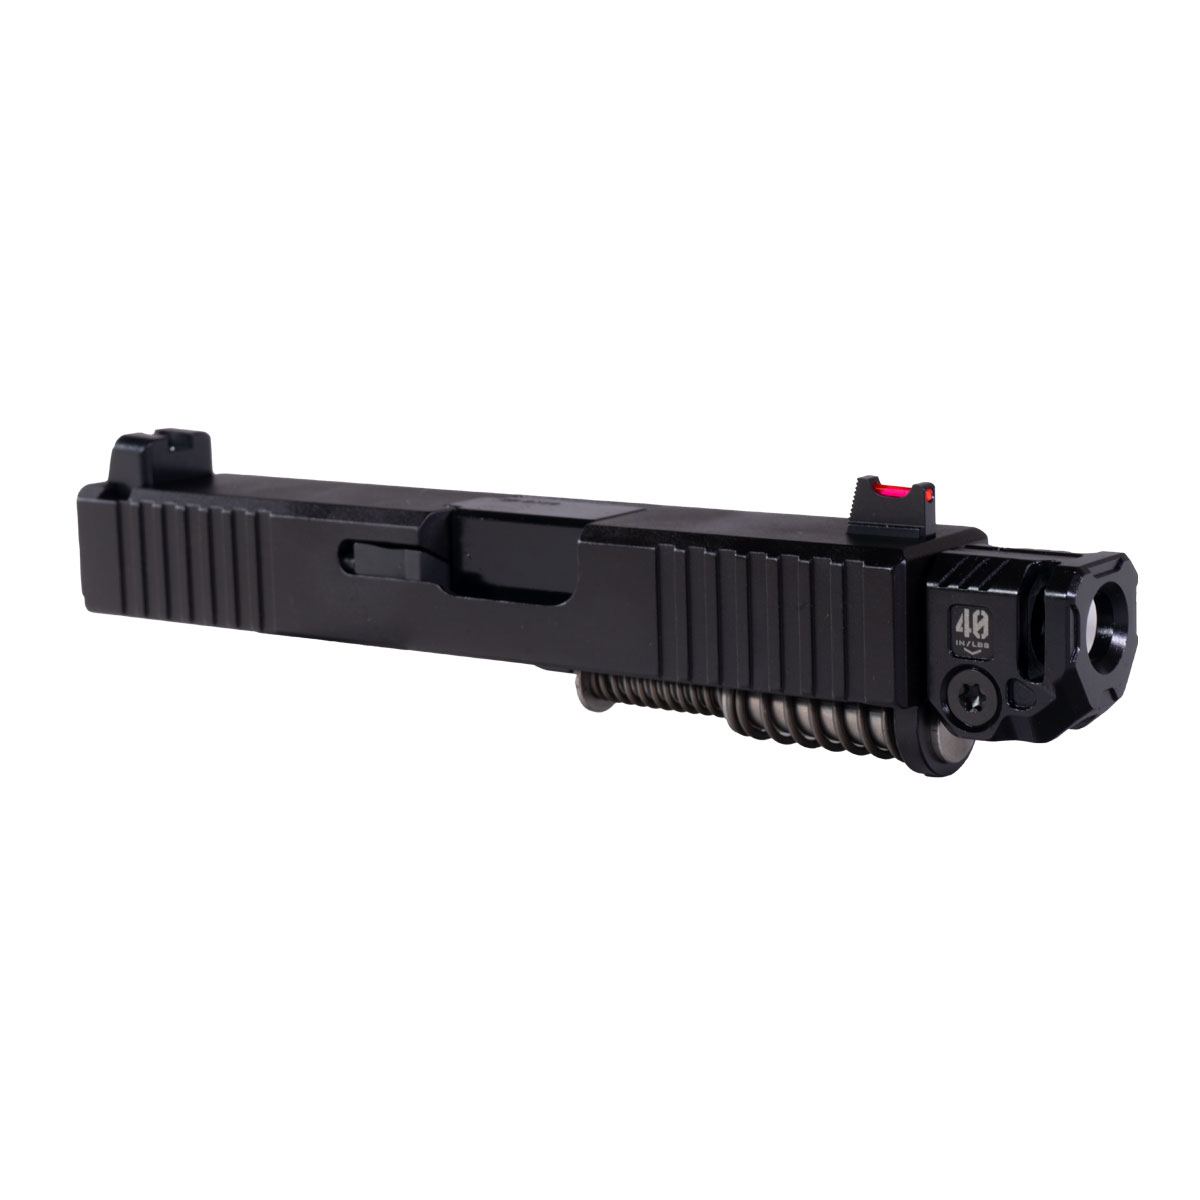 OTD 'Twenty-six w/ Strike Industries Compensator' 9mm Complete Slide Kit - Glock 26 Gen 1-2 Compatible